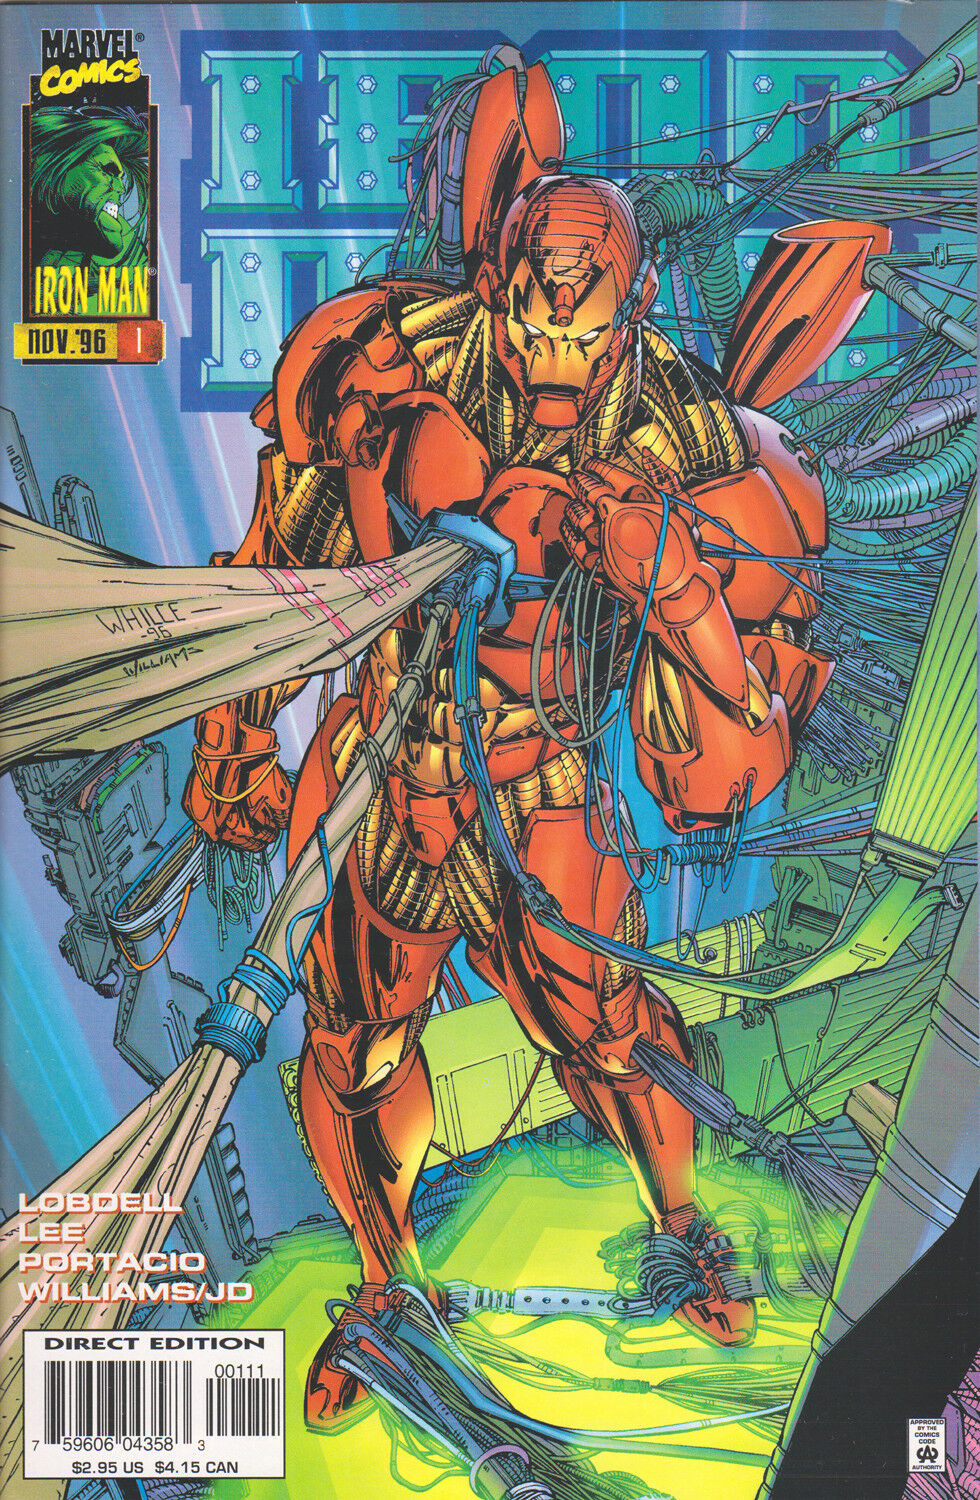 IRON MAN #1 (VOL. 2) COMIC BOOK ~ Whilce Portacio Art ~ Marvel Comics